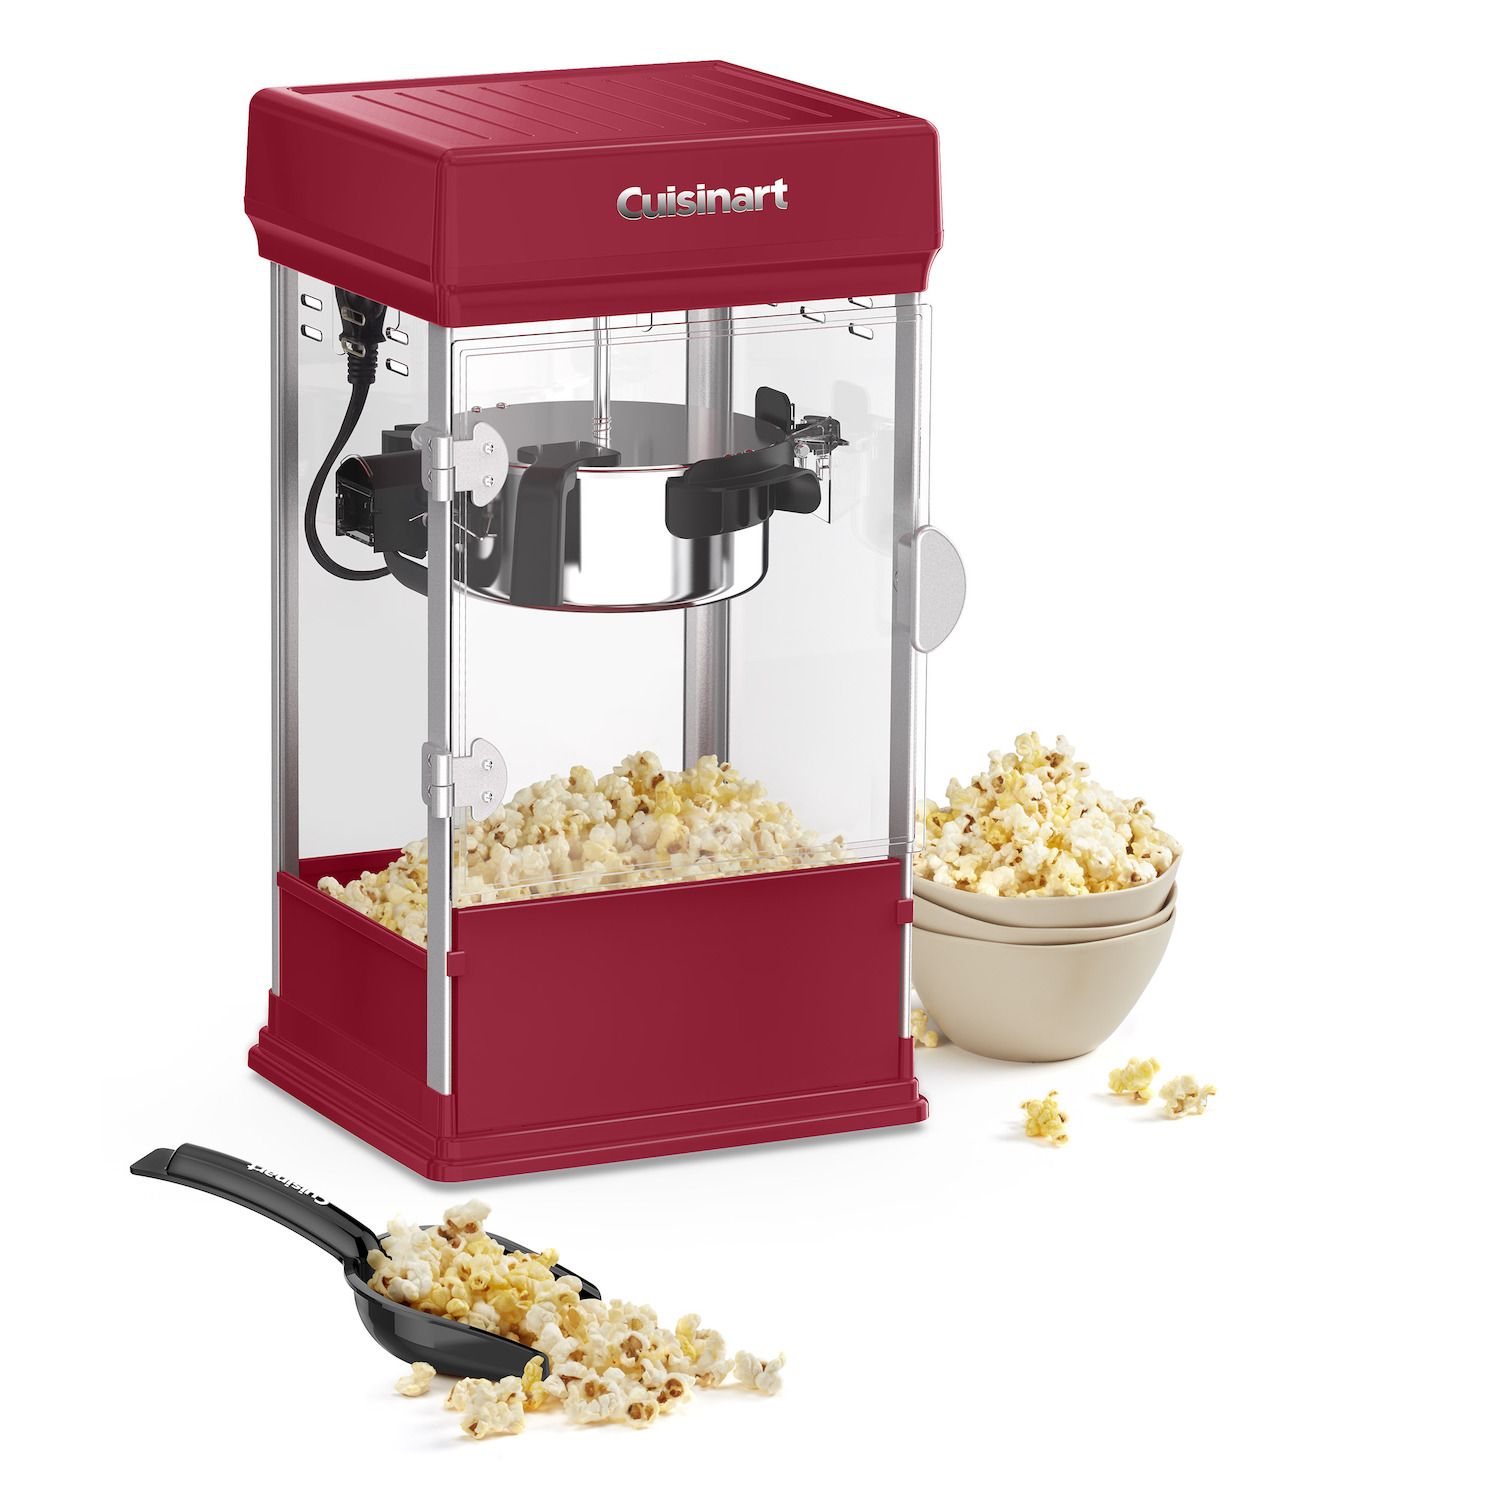 Dash Smartstore Stirring Popcorn Maker